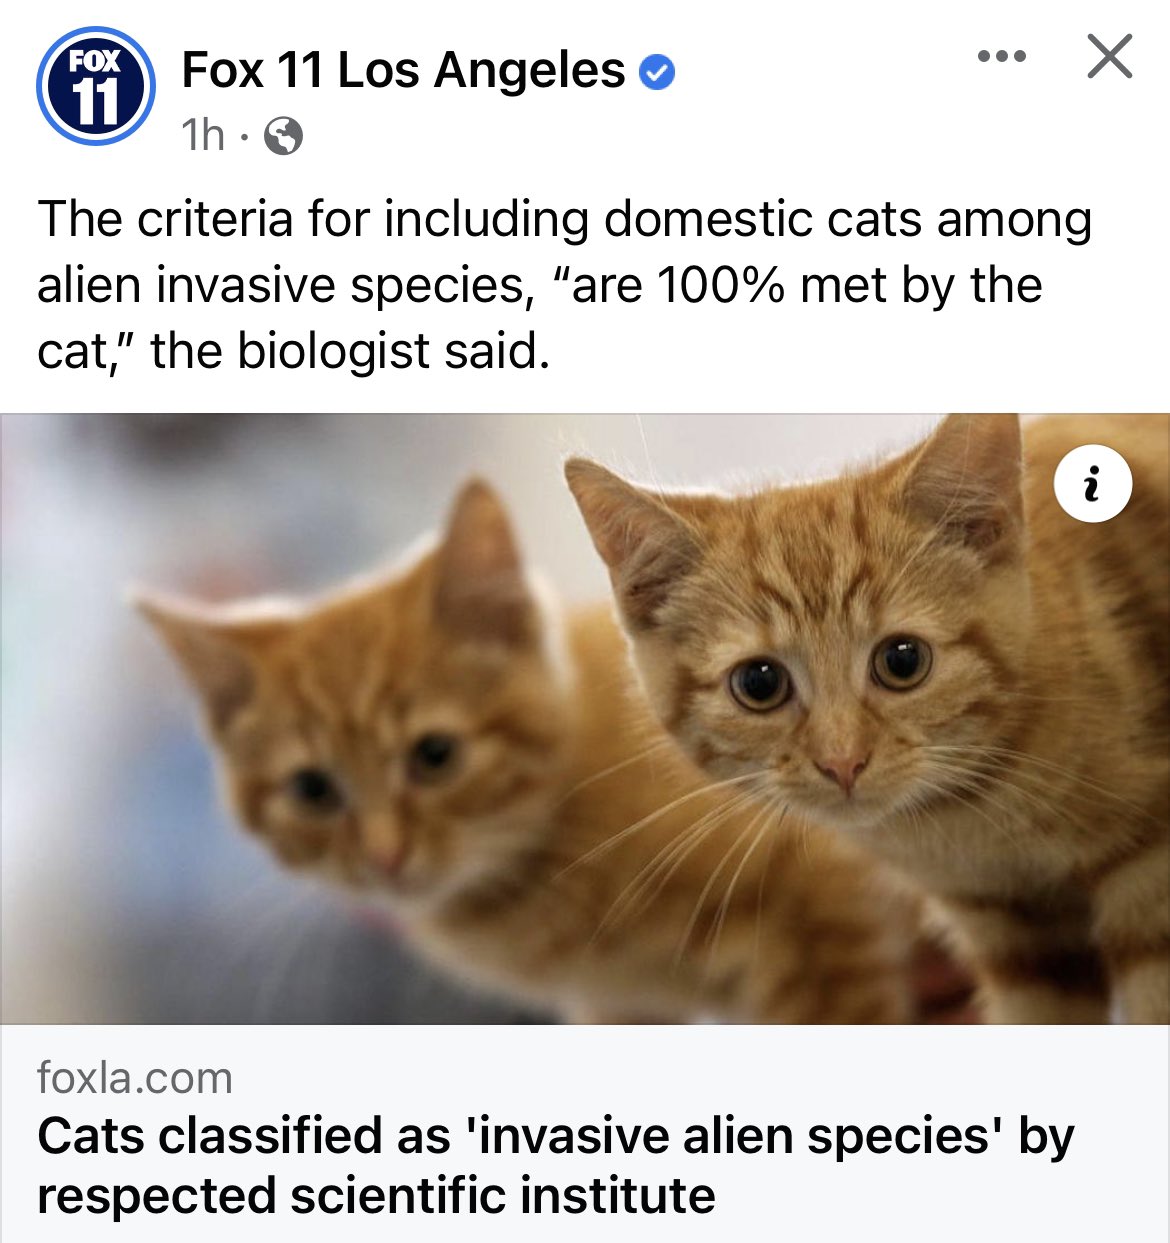 Cats classified as 'invasive alien species' by scientific